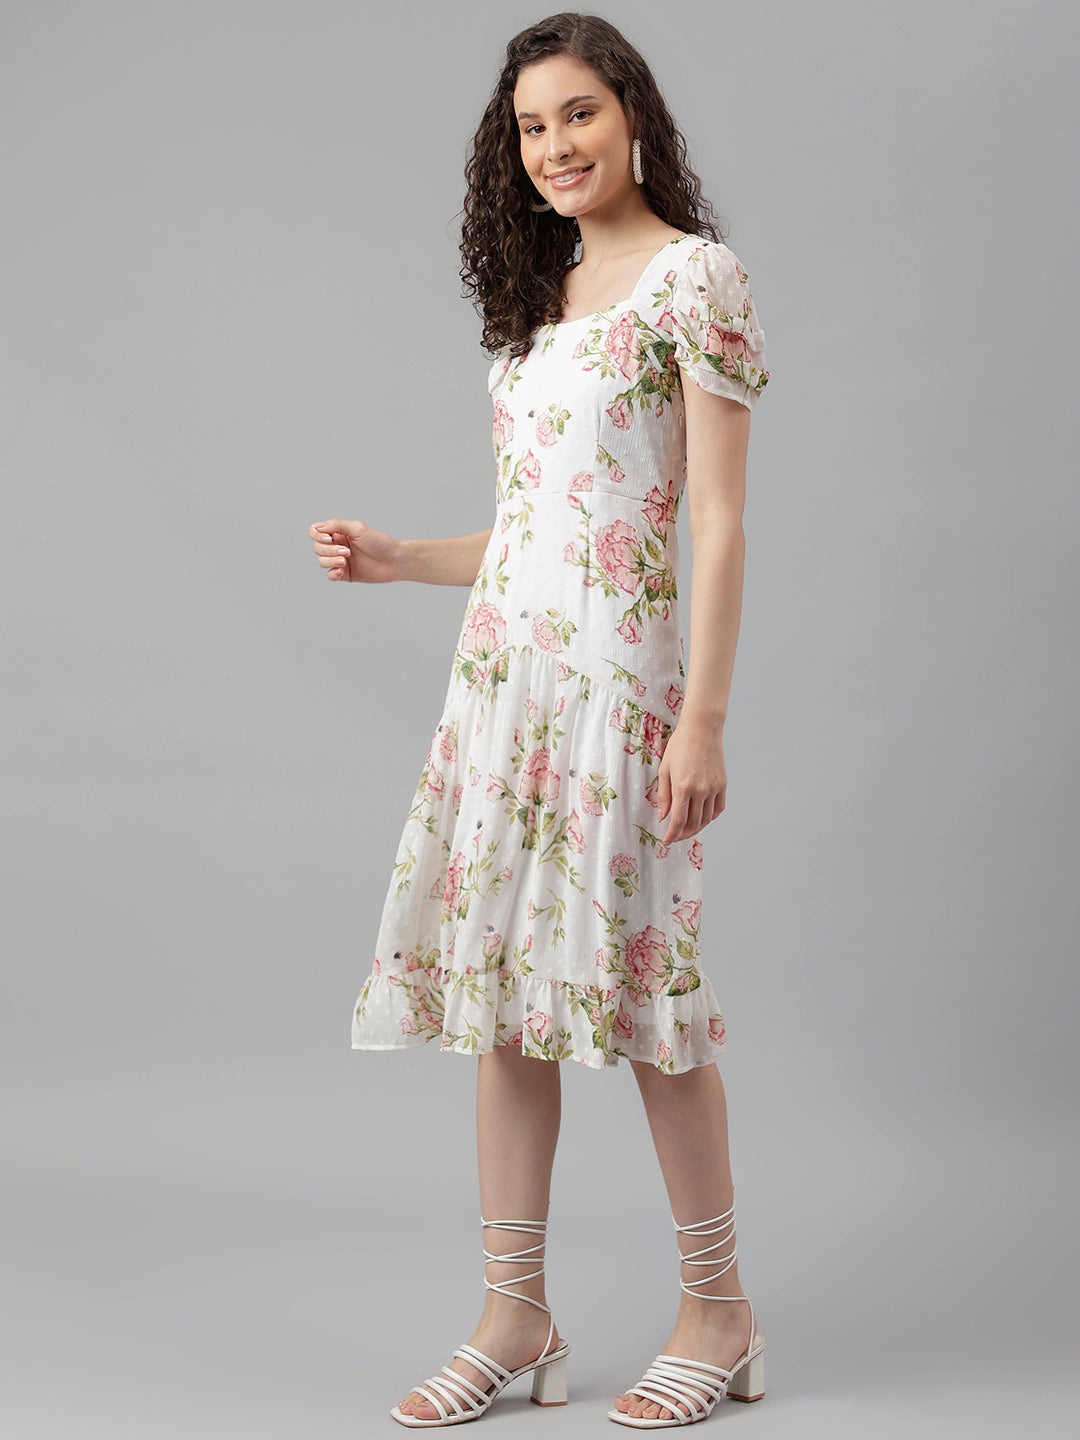 Ivory Half Sleeve Floral Printed A-Line Dress